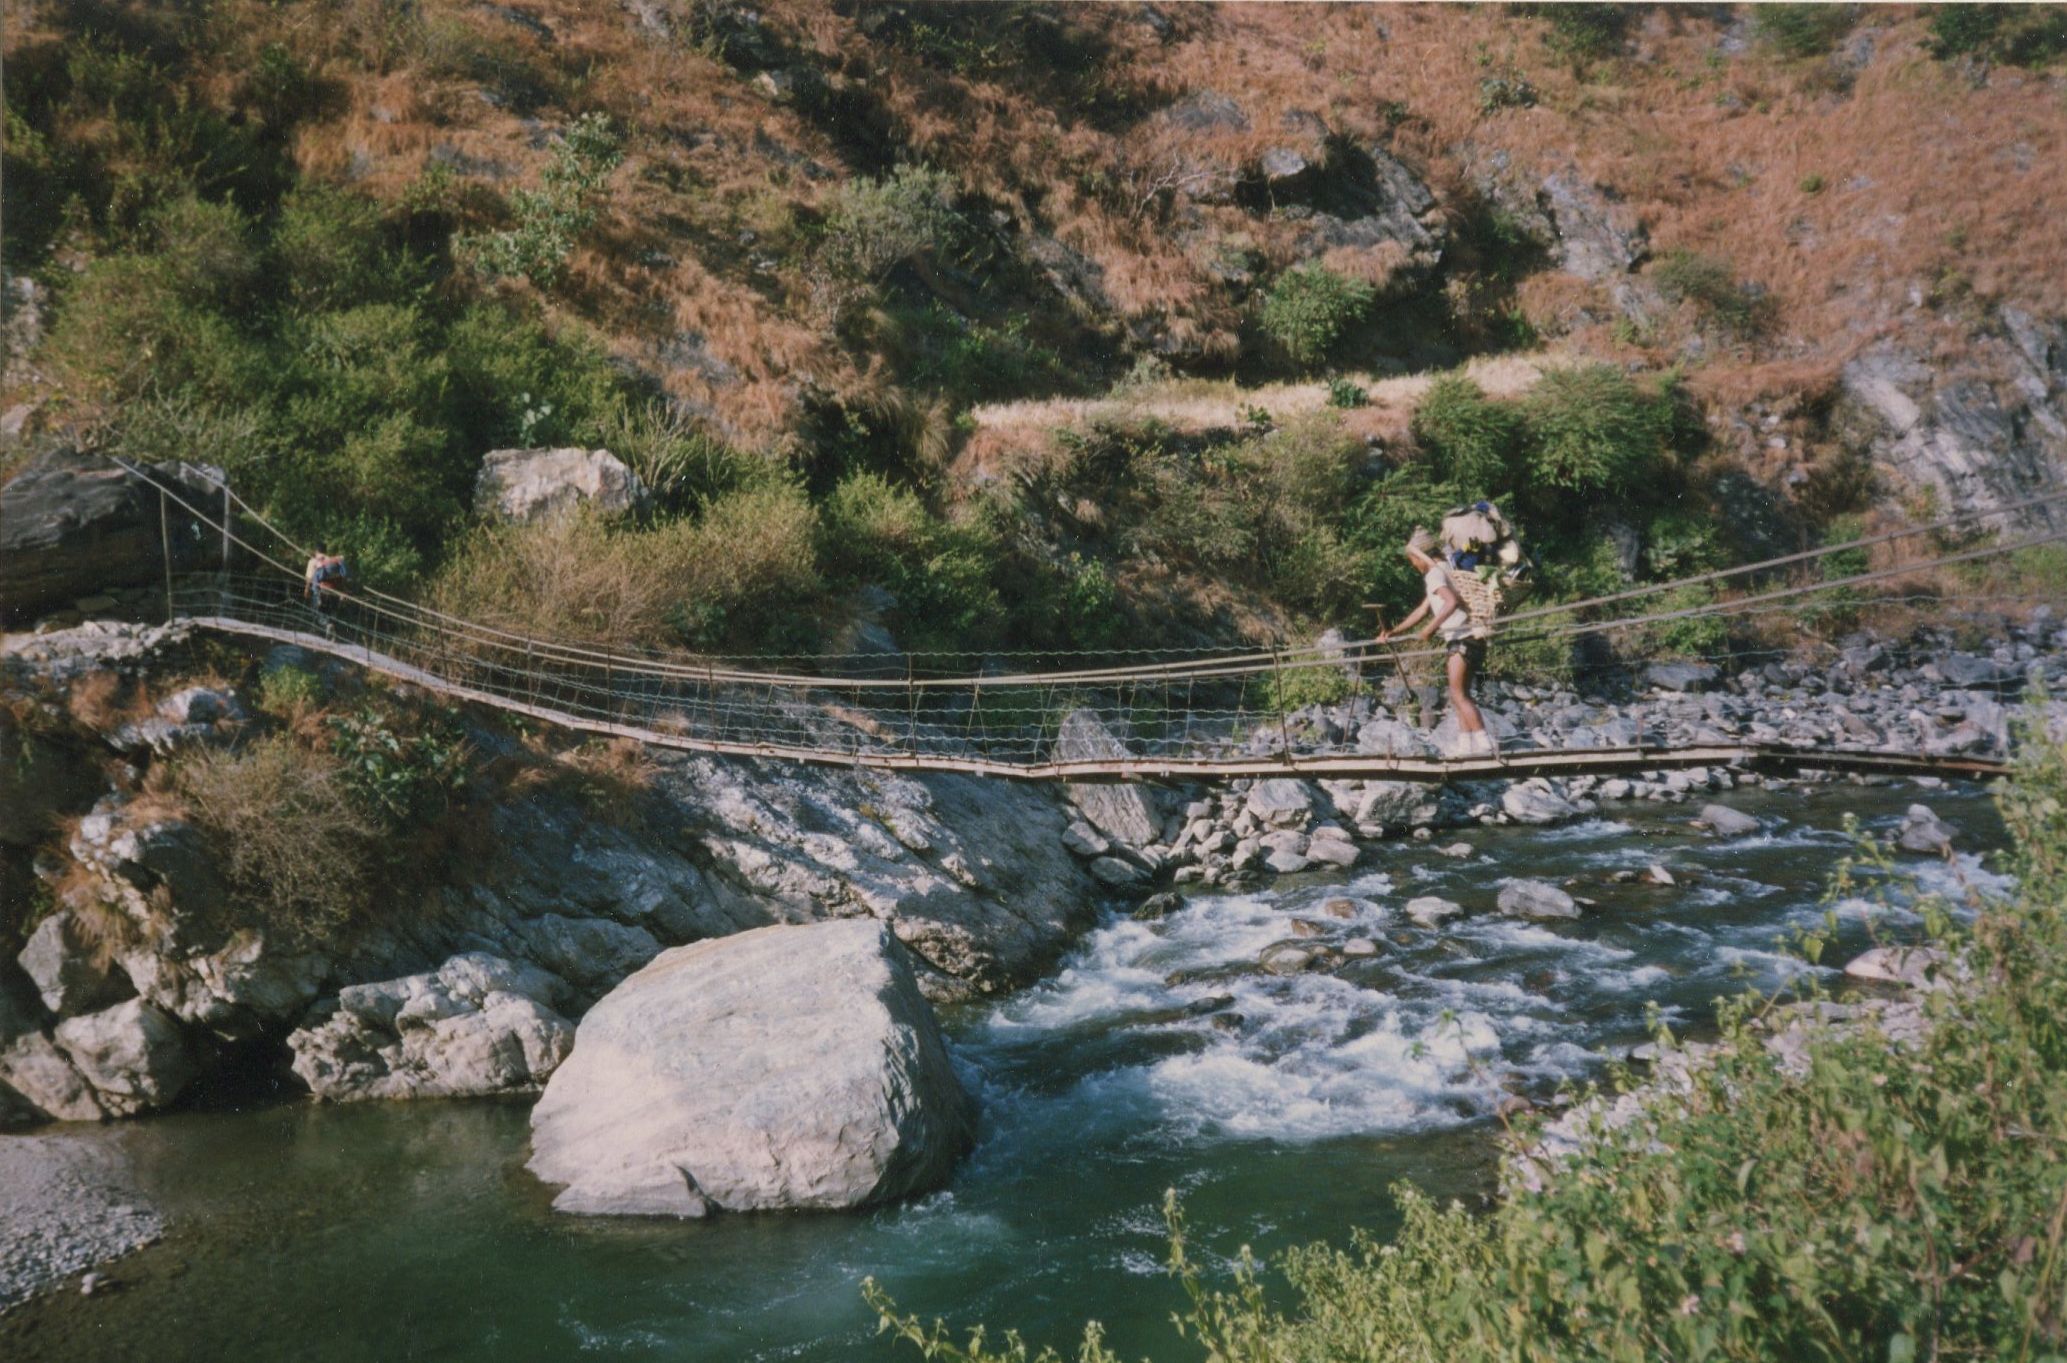 Nepalese Porter crossing Suspension Bridge across the Kabeli Khosi to Yamphudin Village